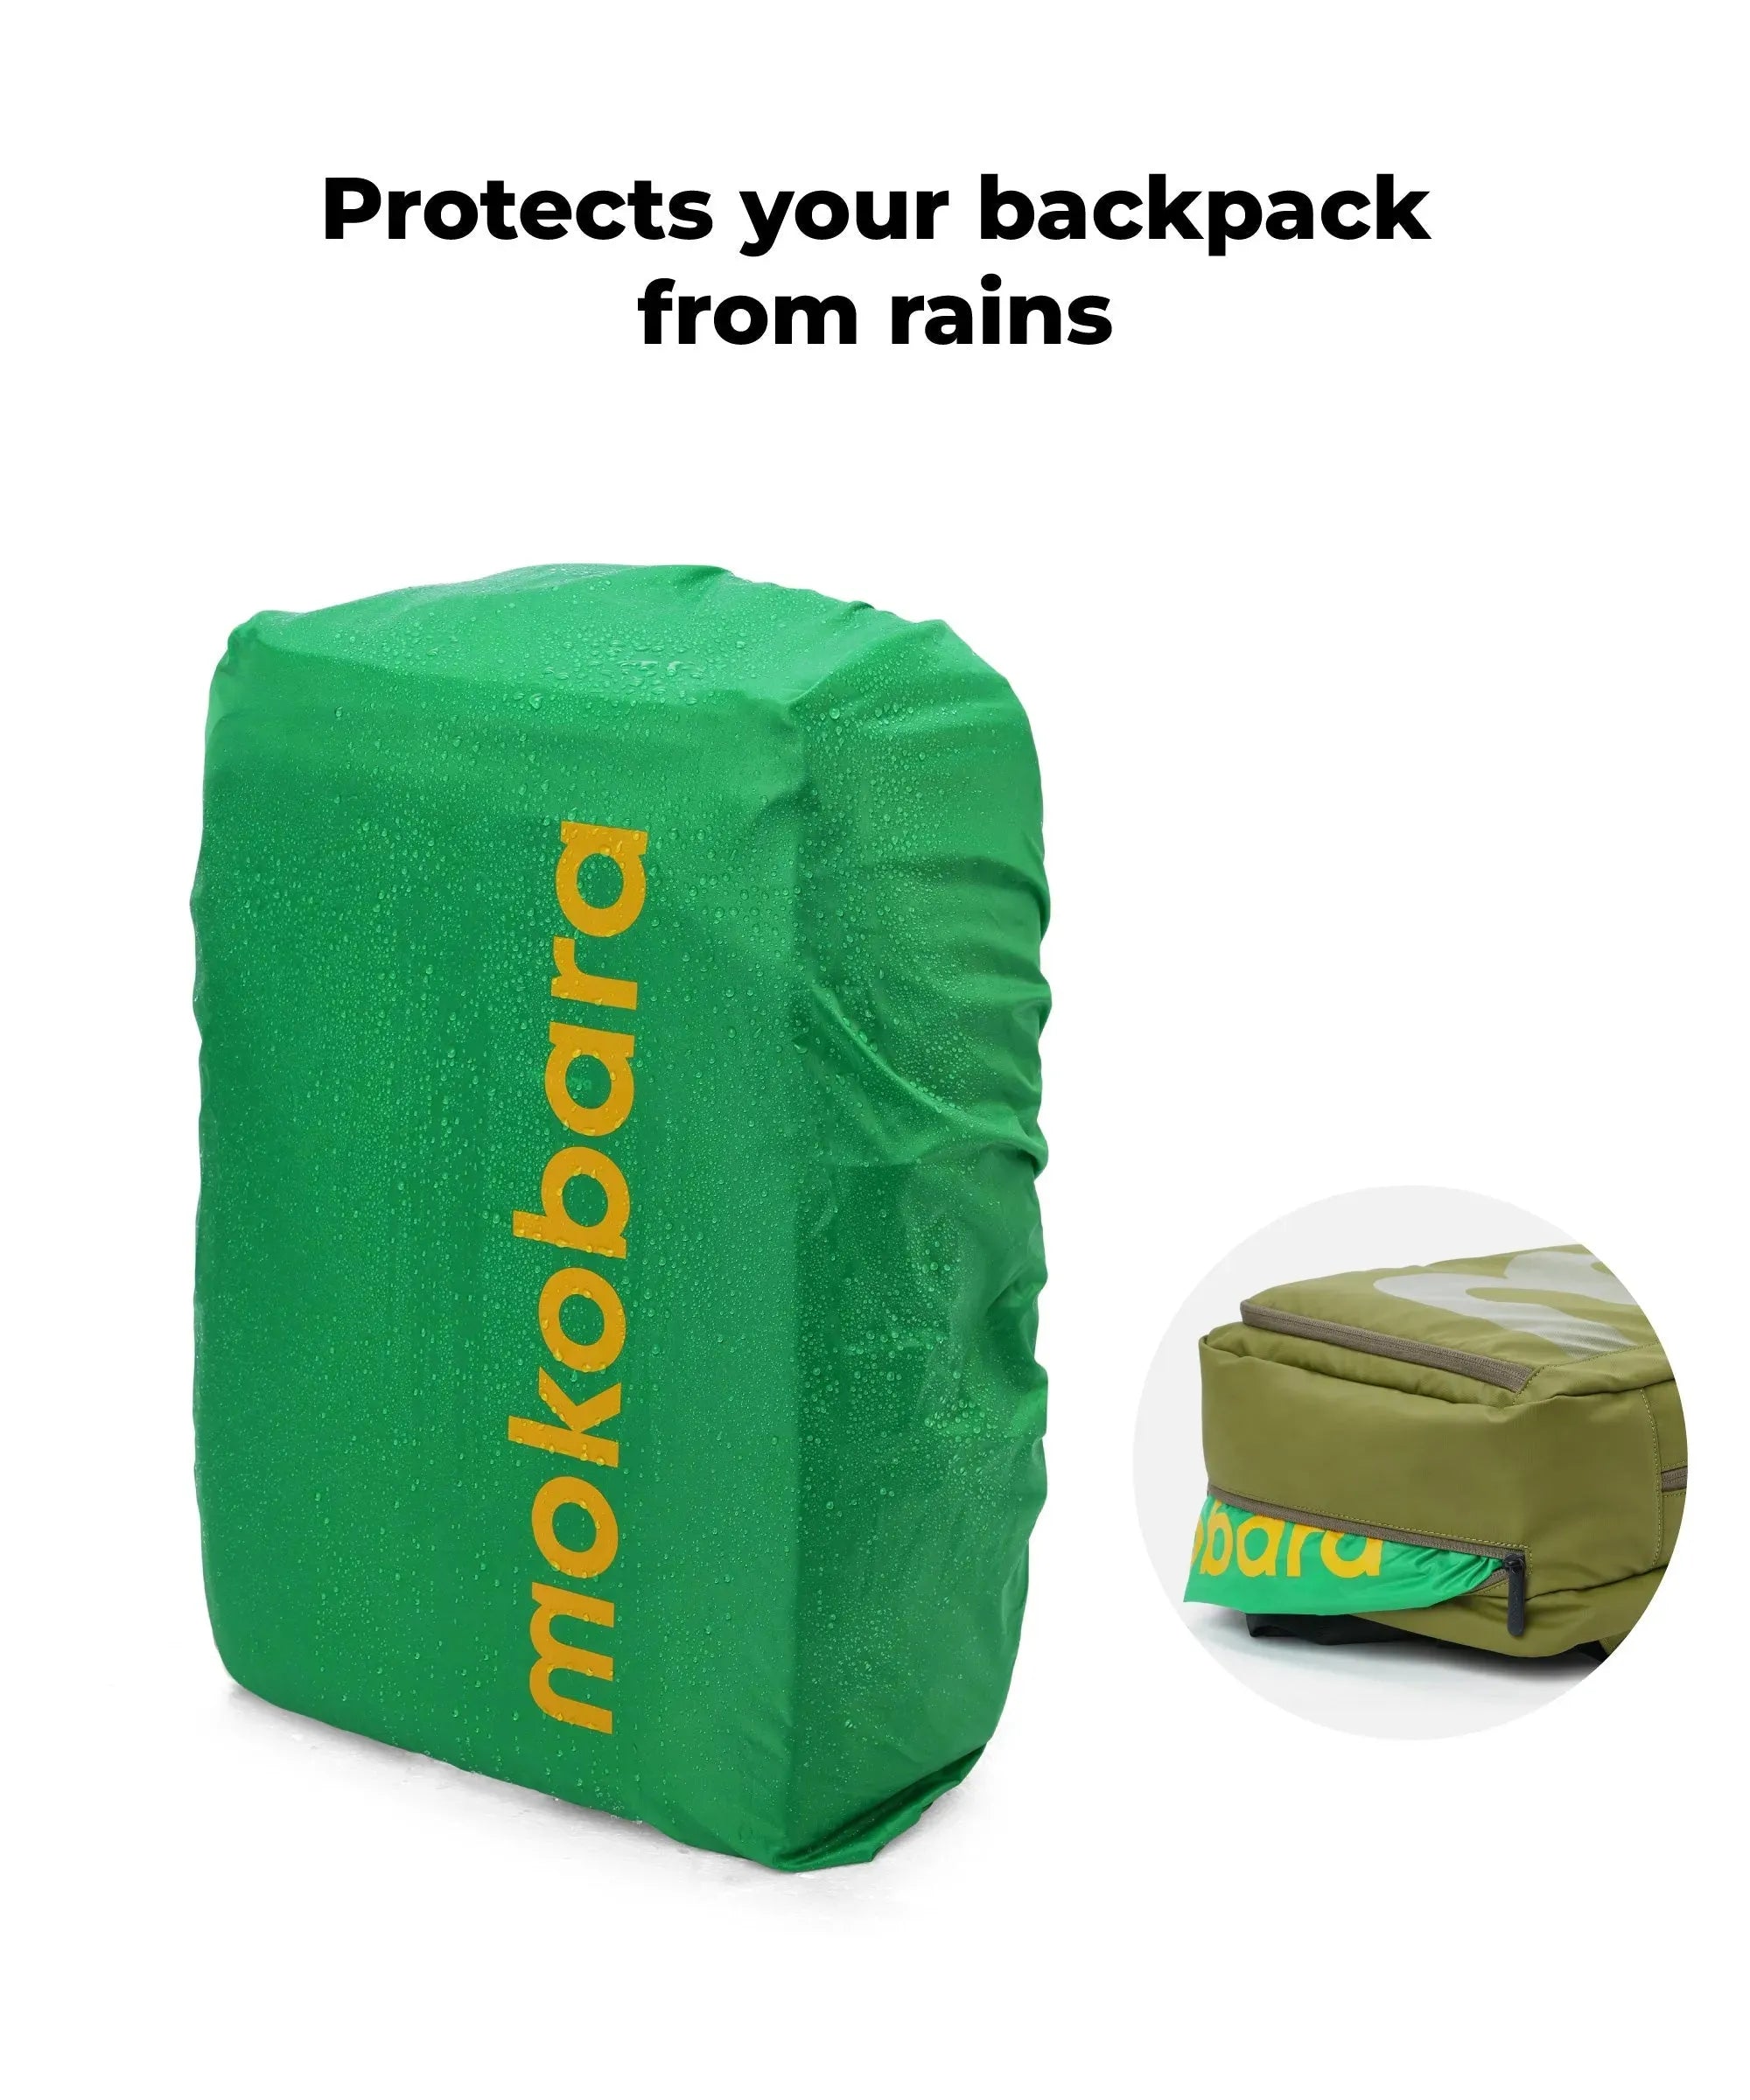 Color_Seaweed Green | The Em Travel Backpack - 32L